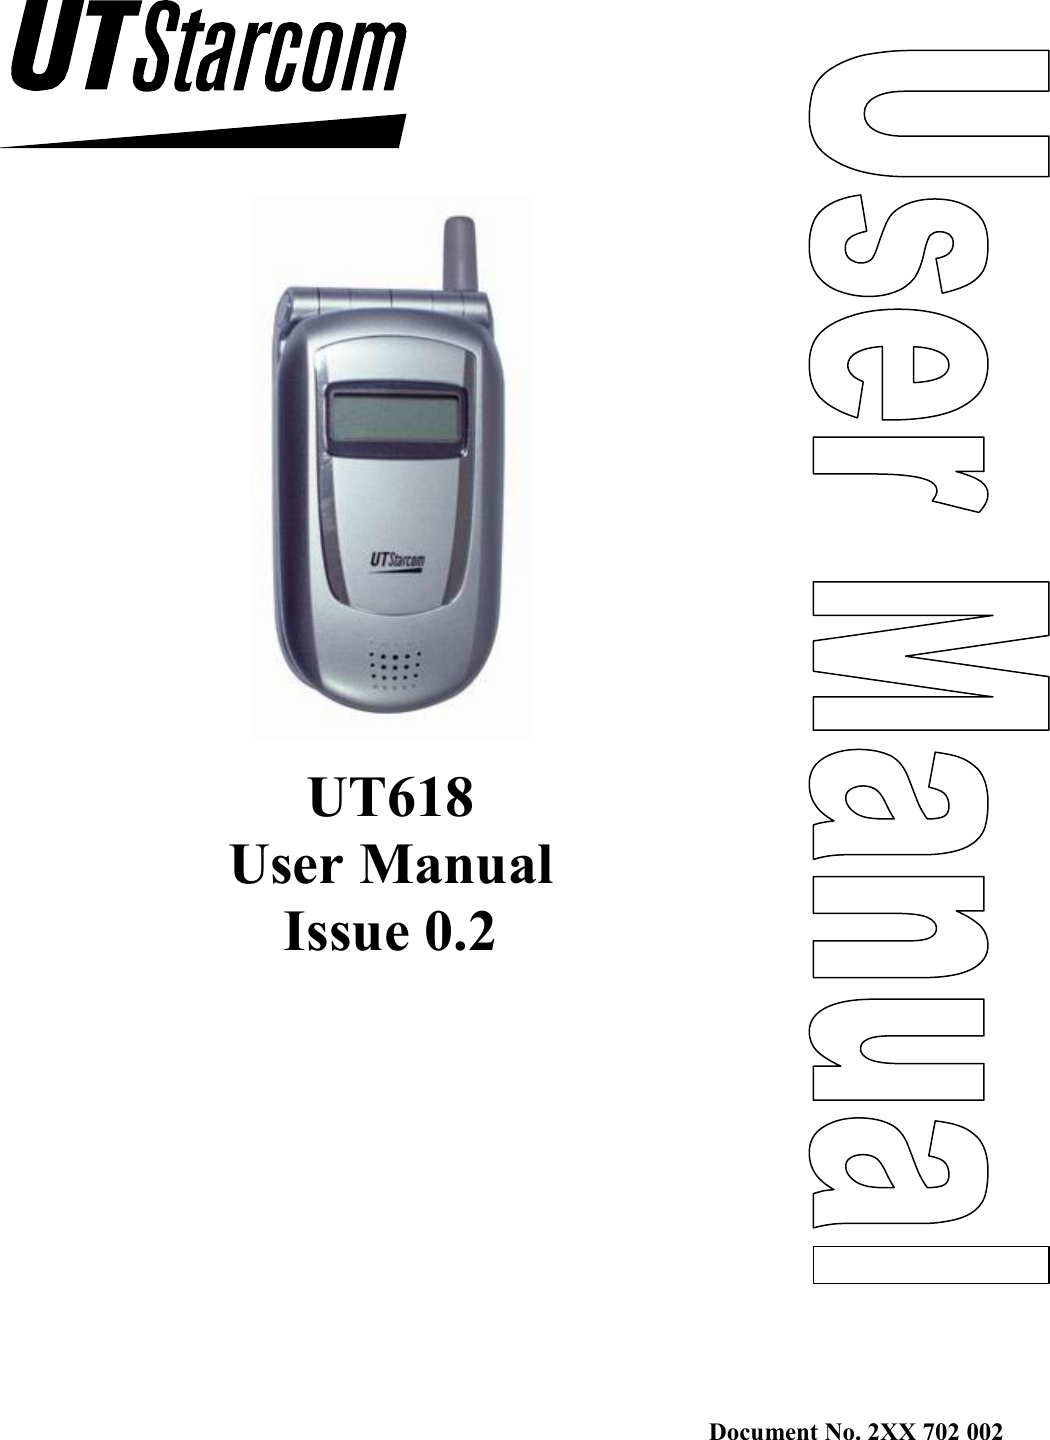  Document No. 2XX 702 002       UT618 User Manual  Issue 0.2 